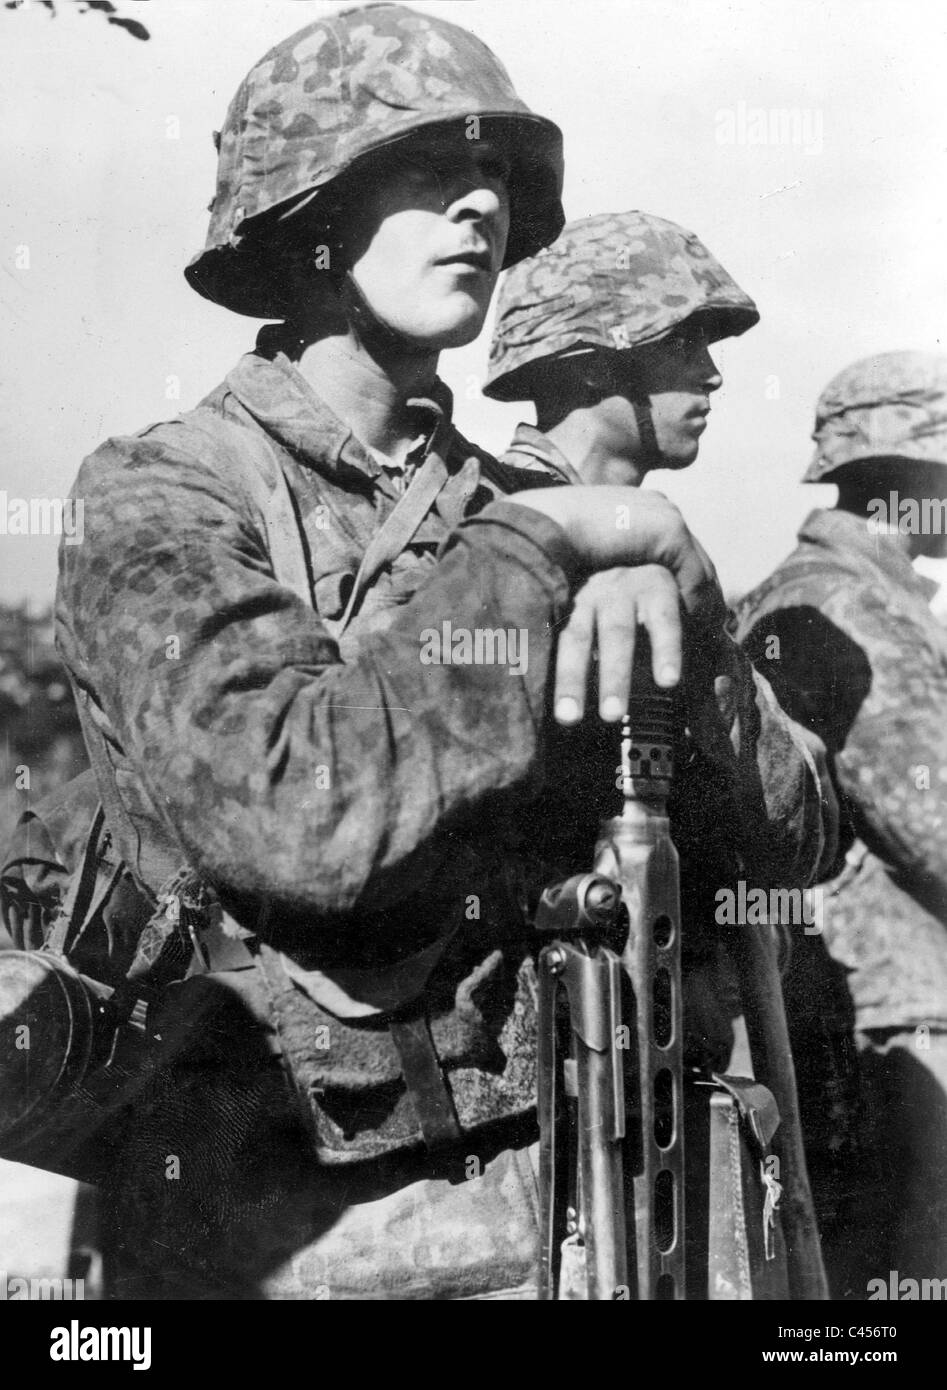 Soldaten der 12. SS-Panzer-Division "Hitlerjugend", 1944 Stockfoto